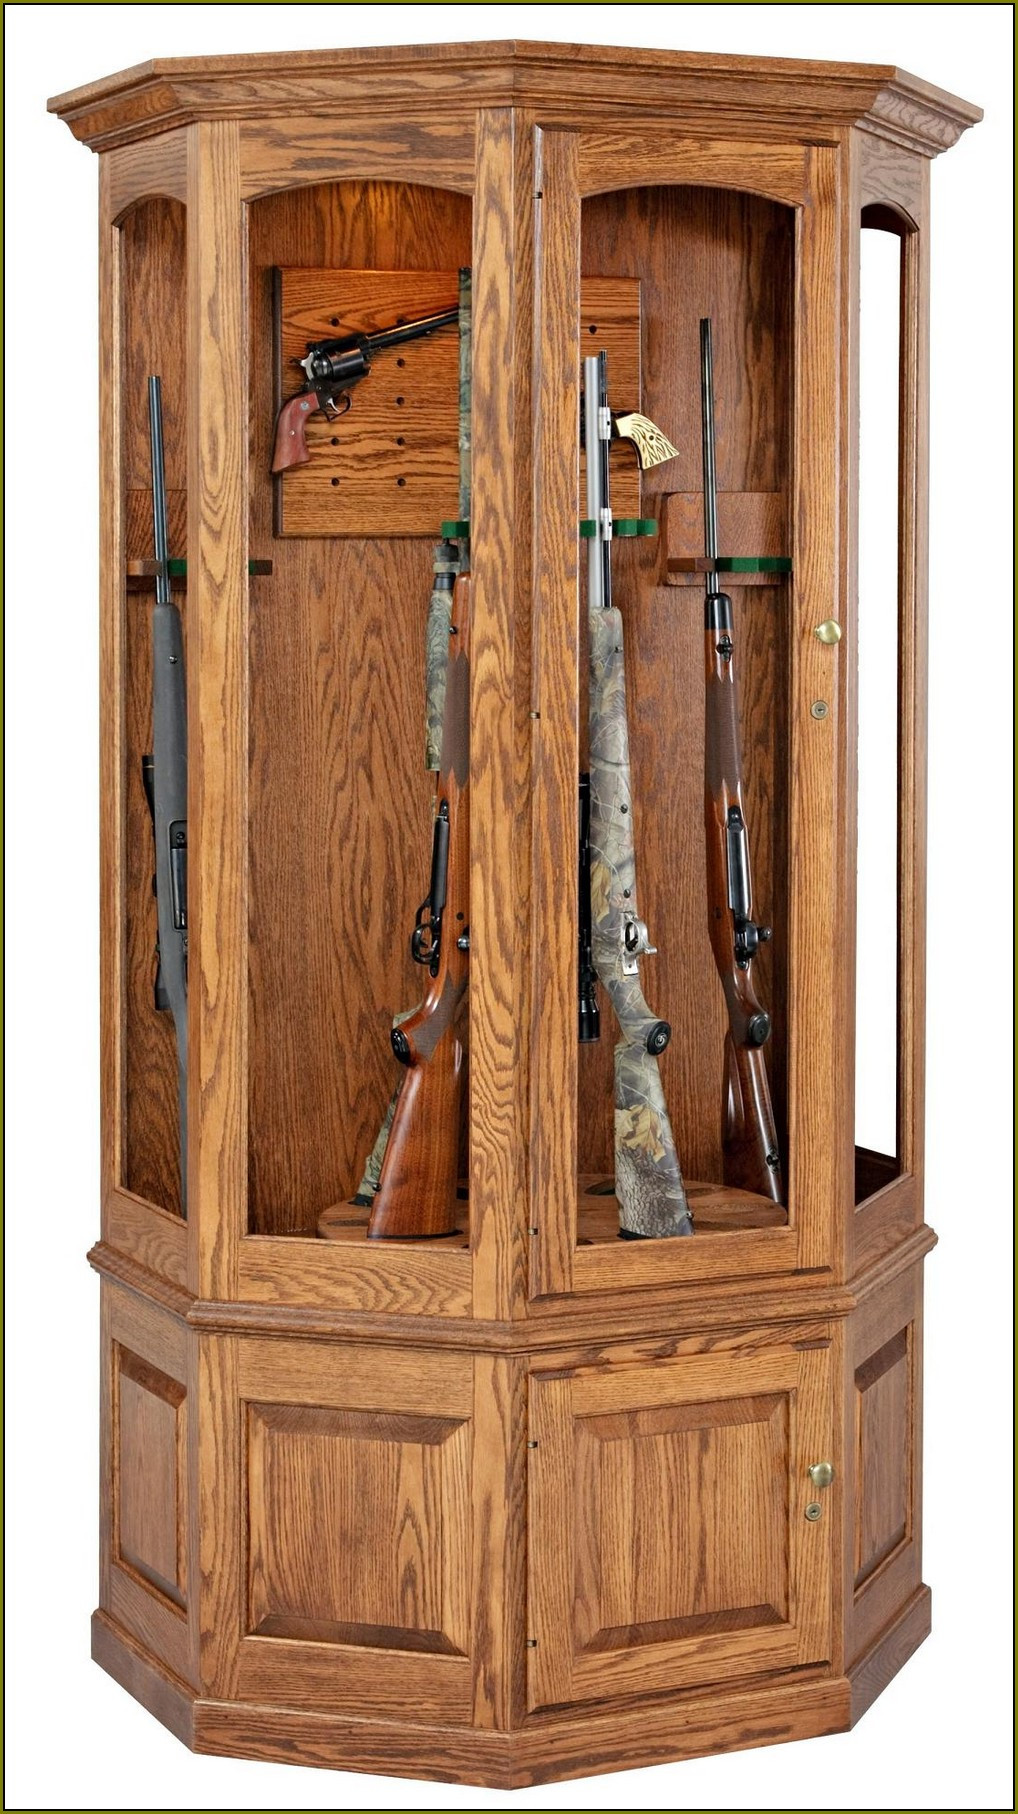 Best ideas about Gun Cabinet Walmart
. Save or Pin Walmart Gun Cabinets Wood Now.